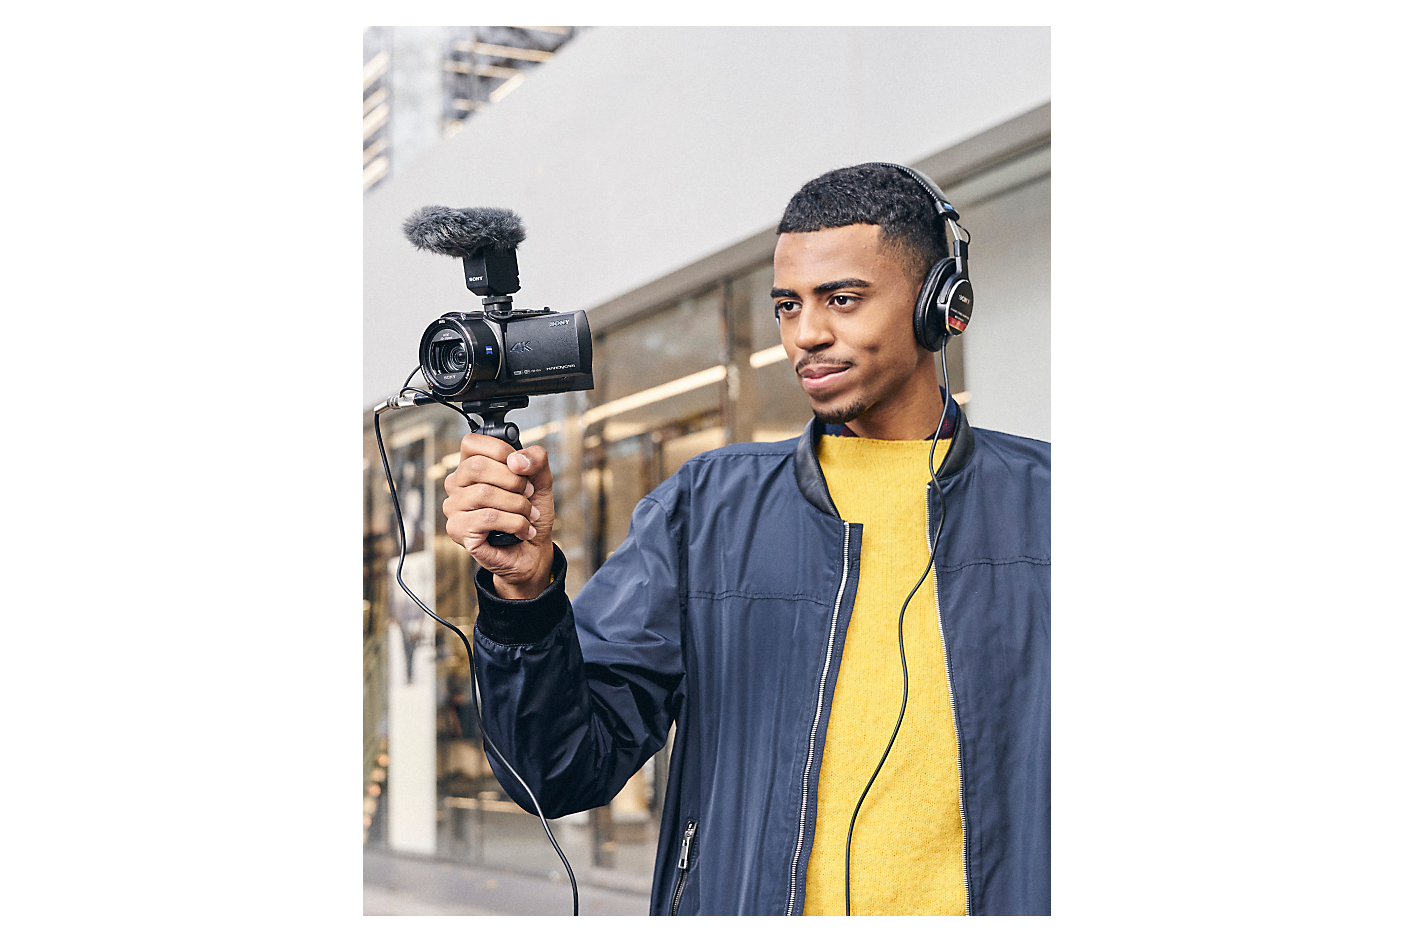 En mand med hovedtelefoner på, der holder et kamera fra Sony med et optagegreb og mikrofon monteret.